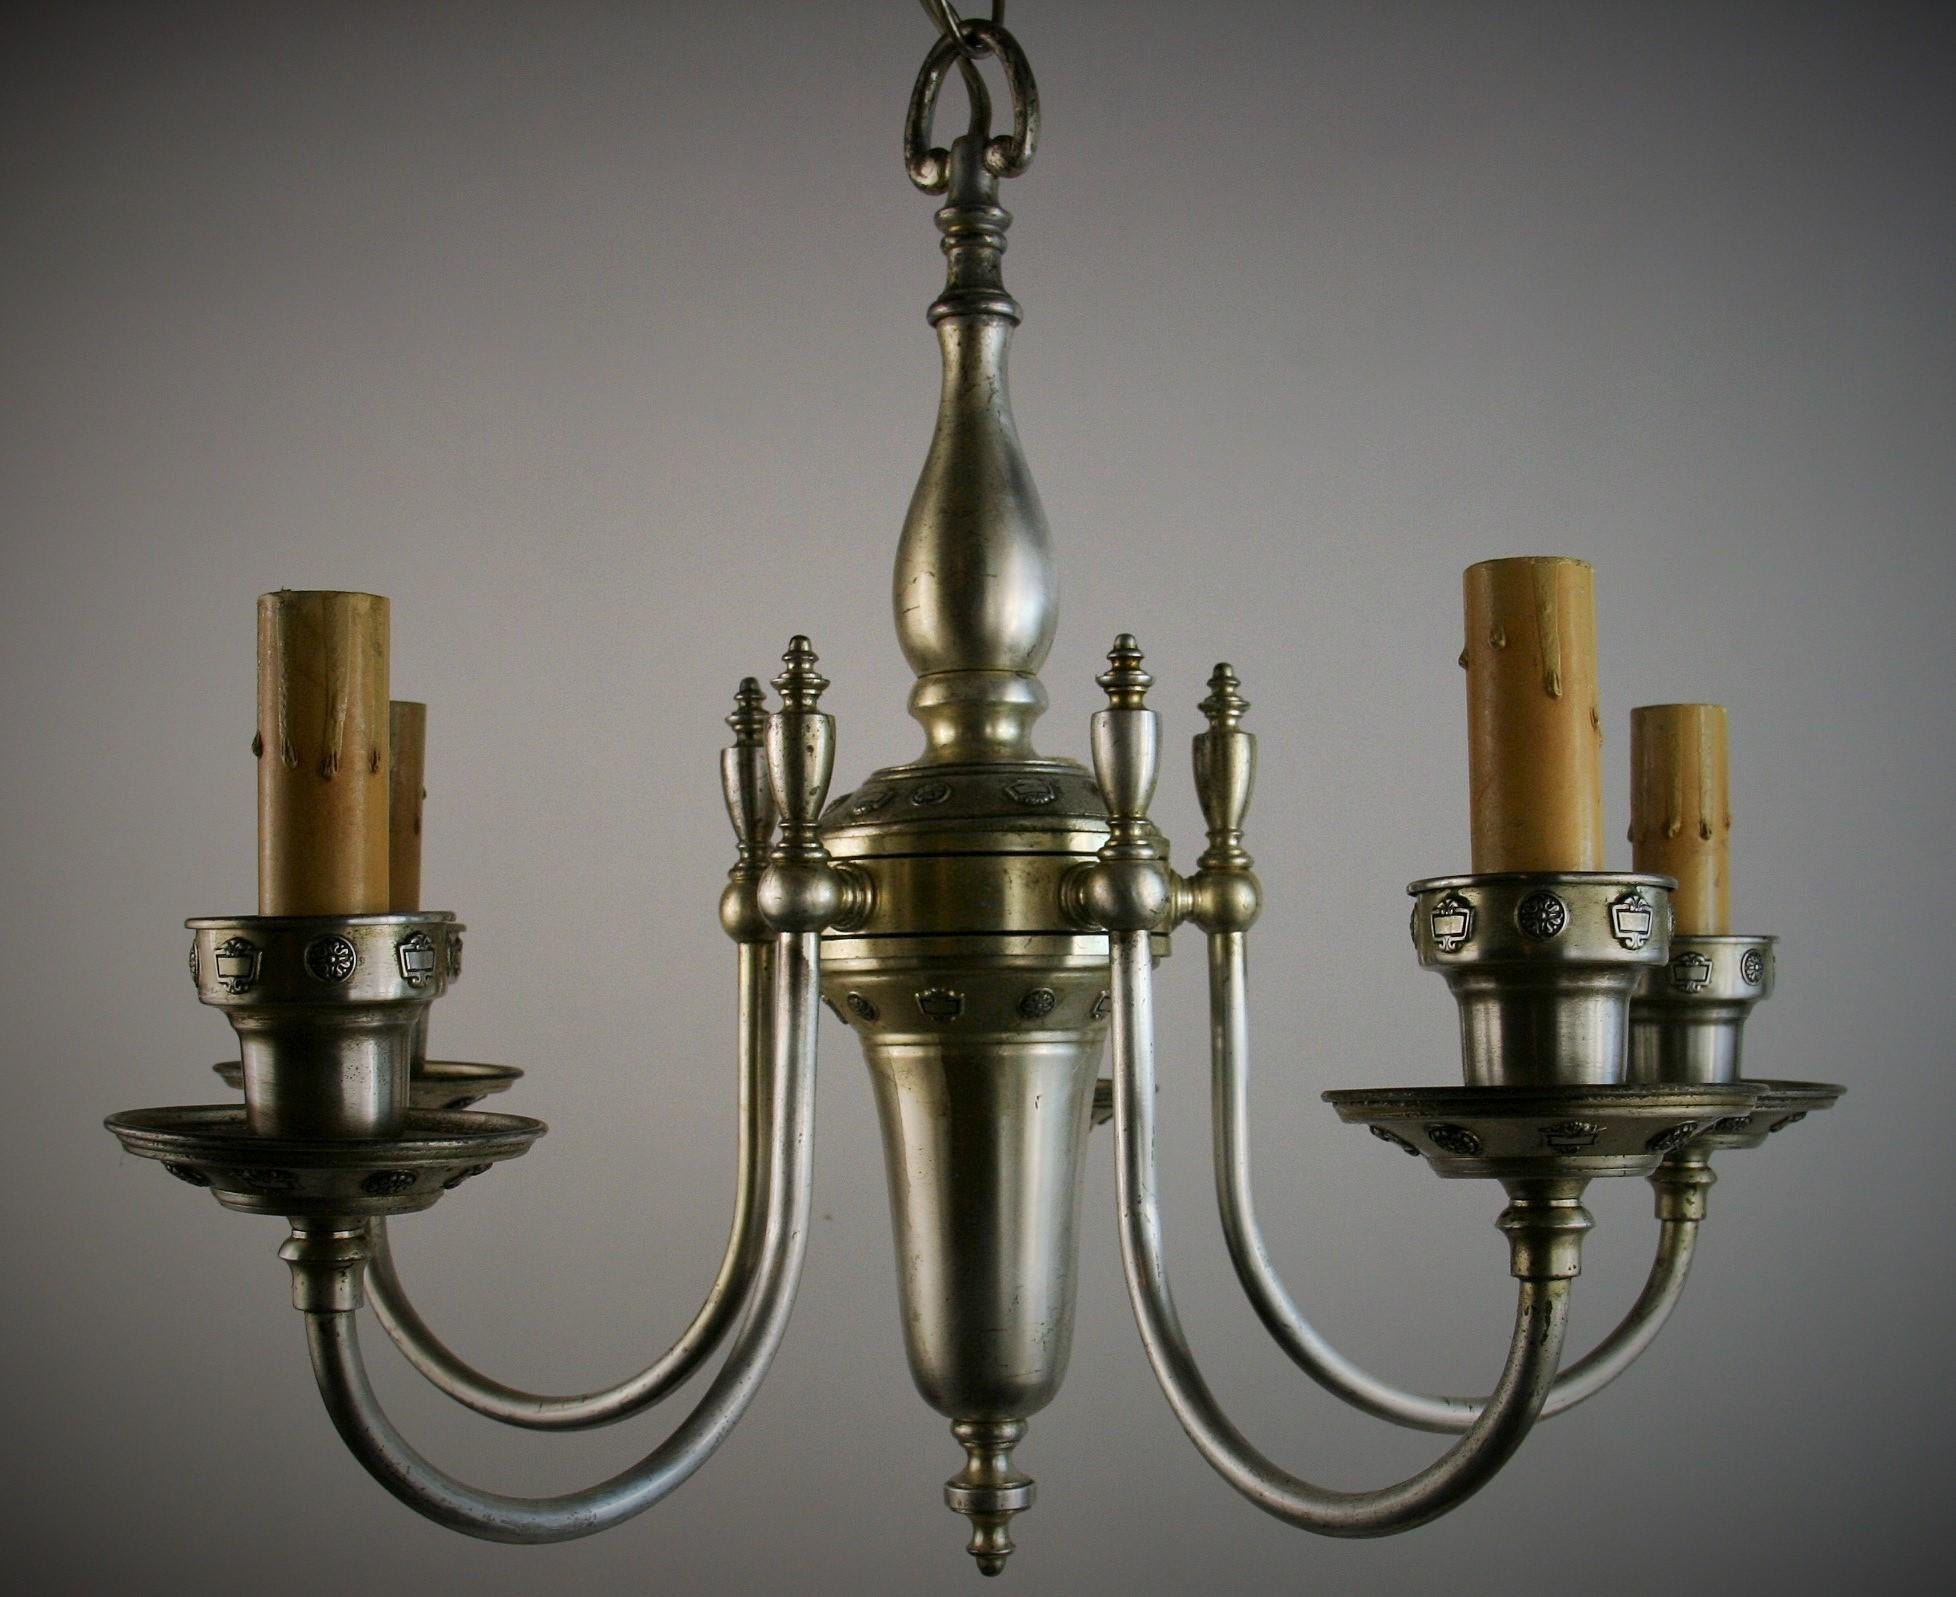 1594  English Silver plated brass 5 light chandelier circa 1920
Rewired 
Taked 60 watt max candelabra based bulbs